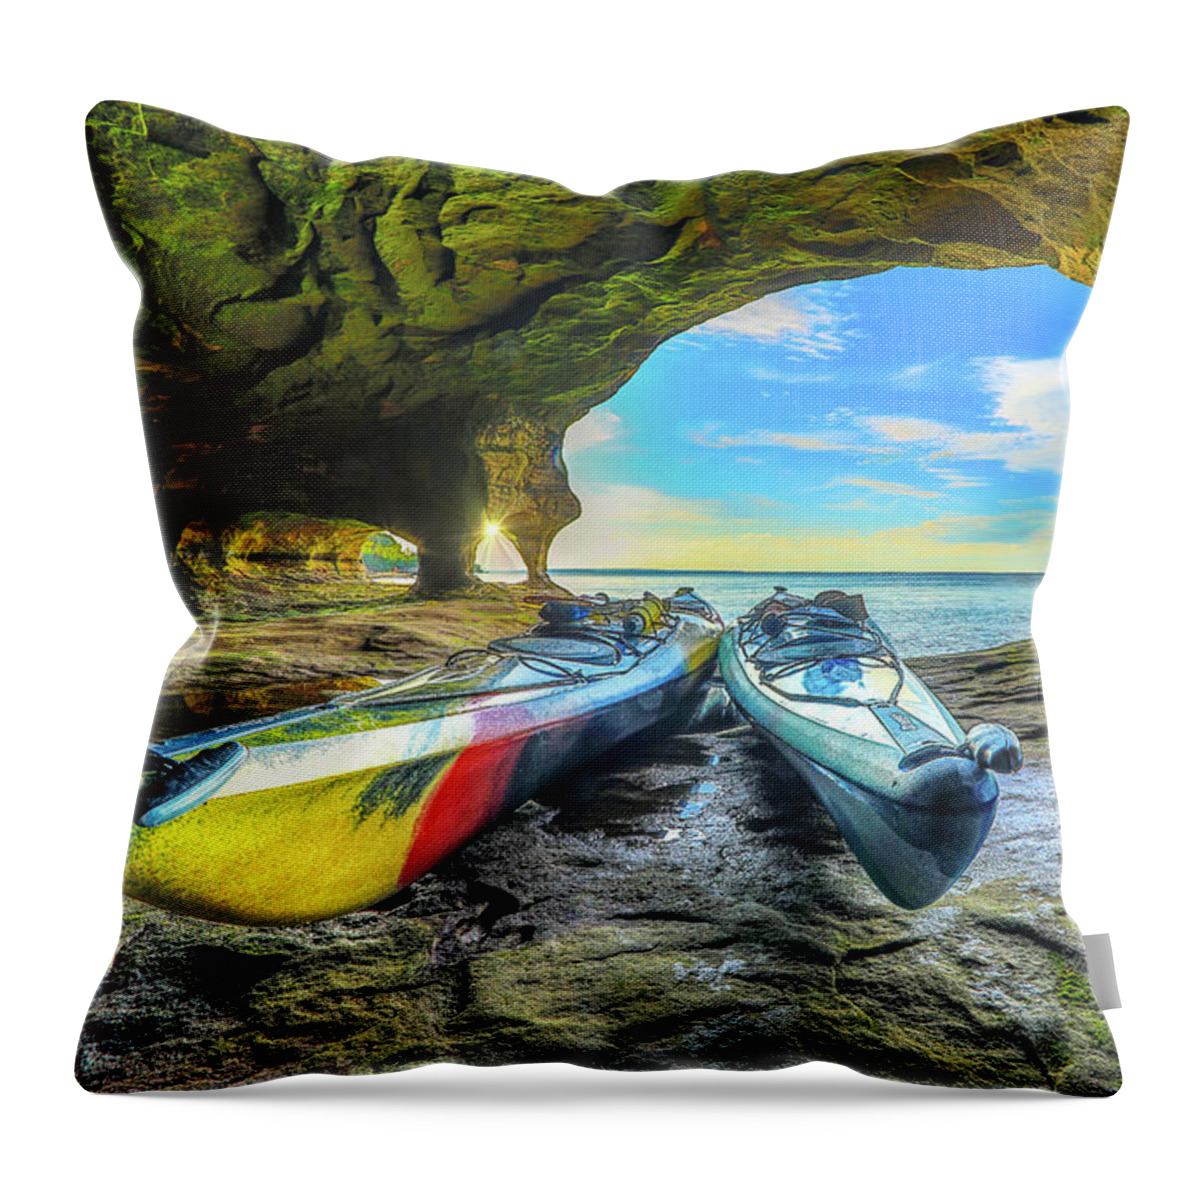 Kayaking Throw Pillow featuring the photograph Pictured Rocks Caves Kayak -1794 by Norris Seward